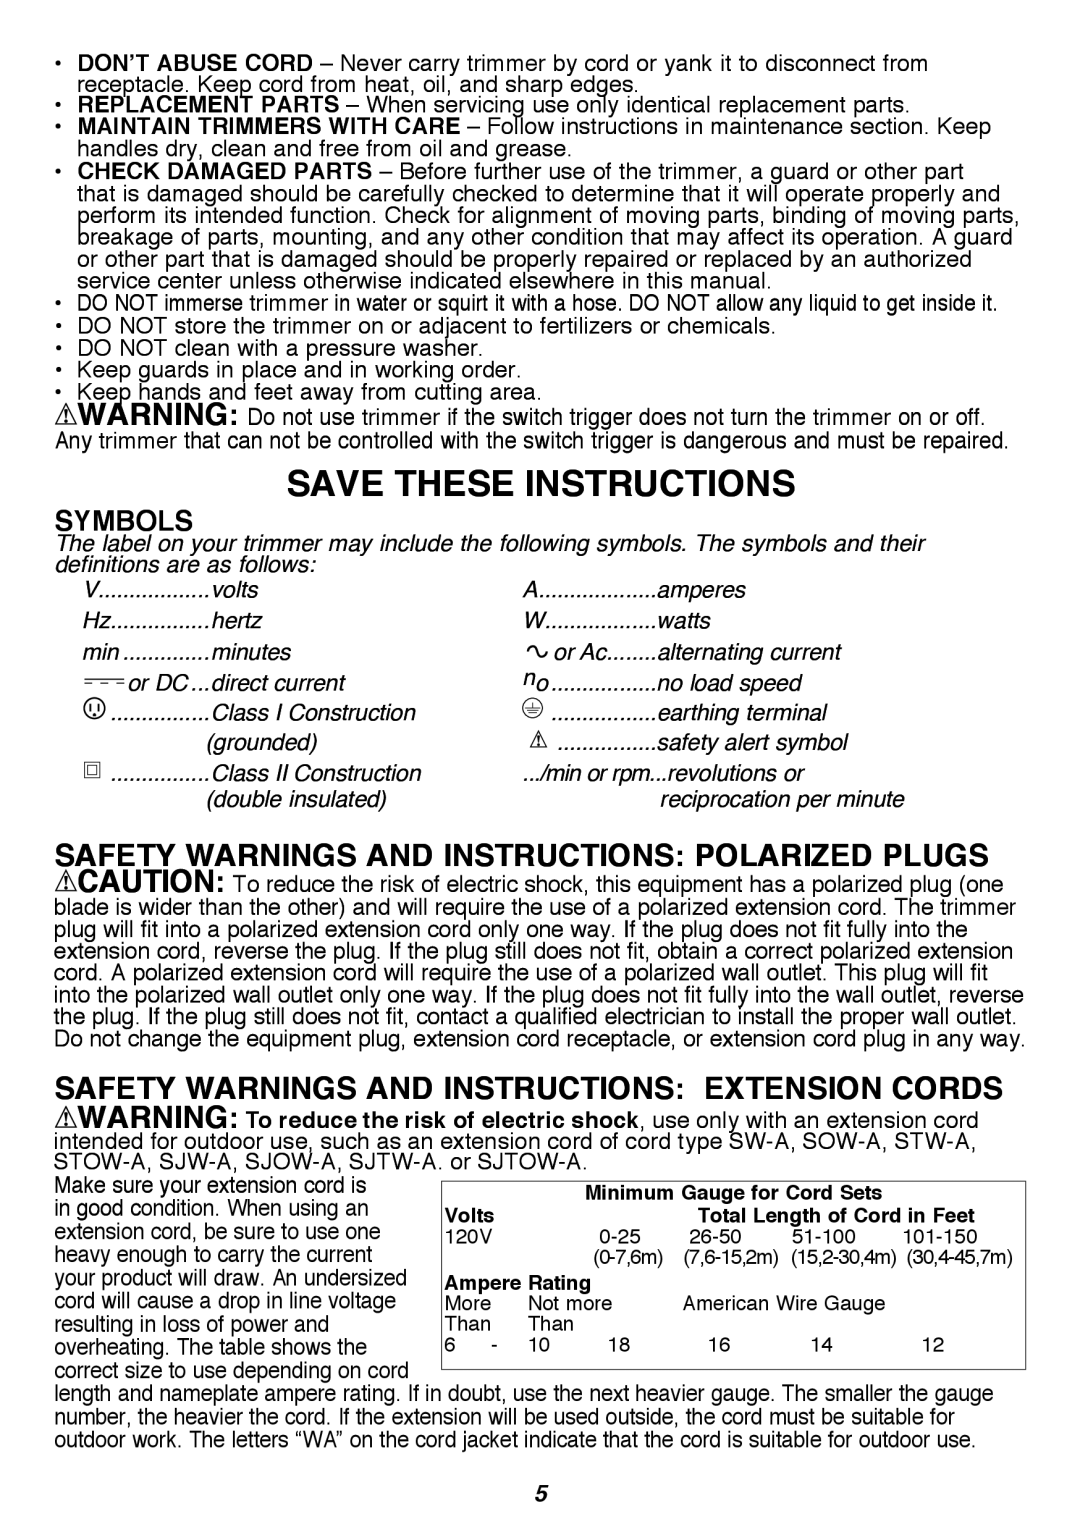 Black & Decker GH900 instruction manual Save These Instructions, Safety Warnings And Instructions Polarized Plugs, Symbols 